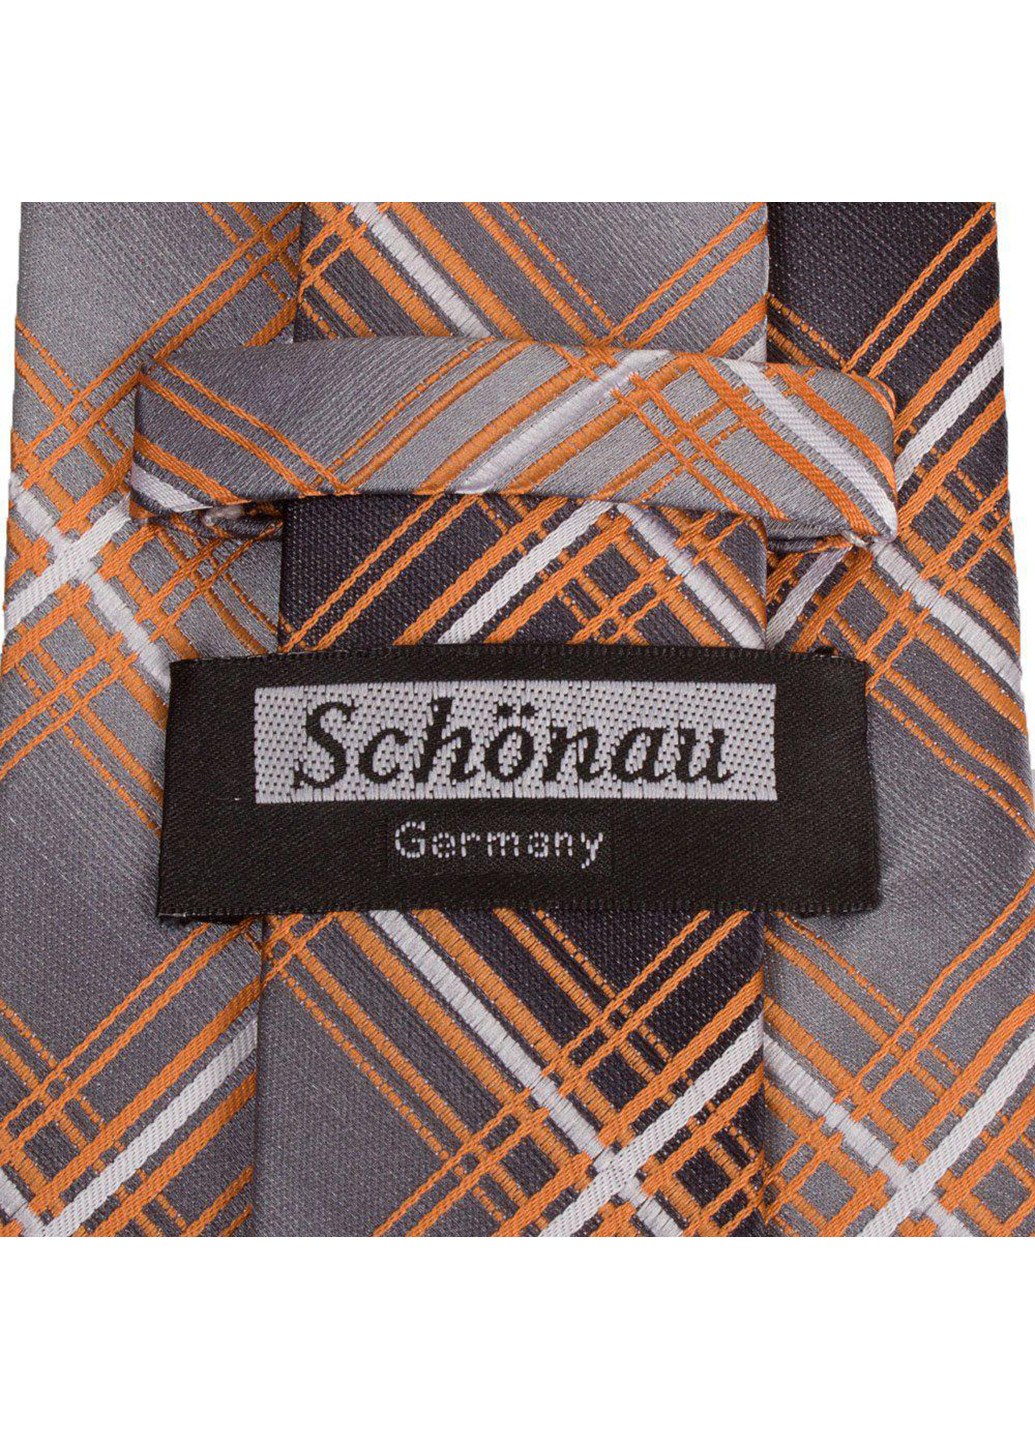 Мужской галстук 149 см Schonau & Houcken (252131681)